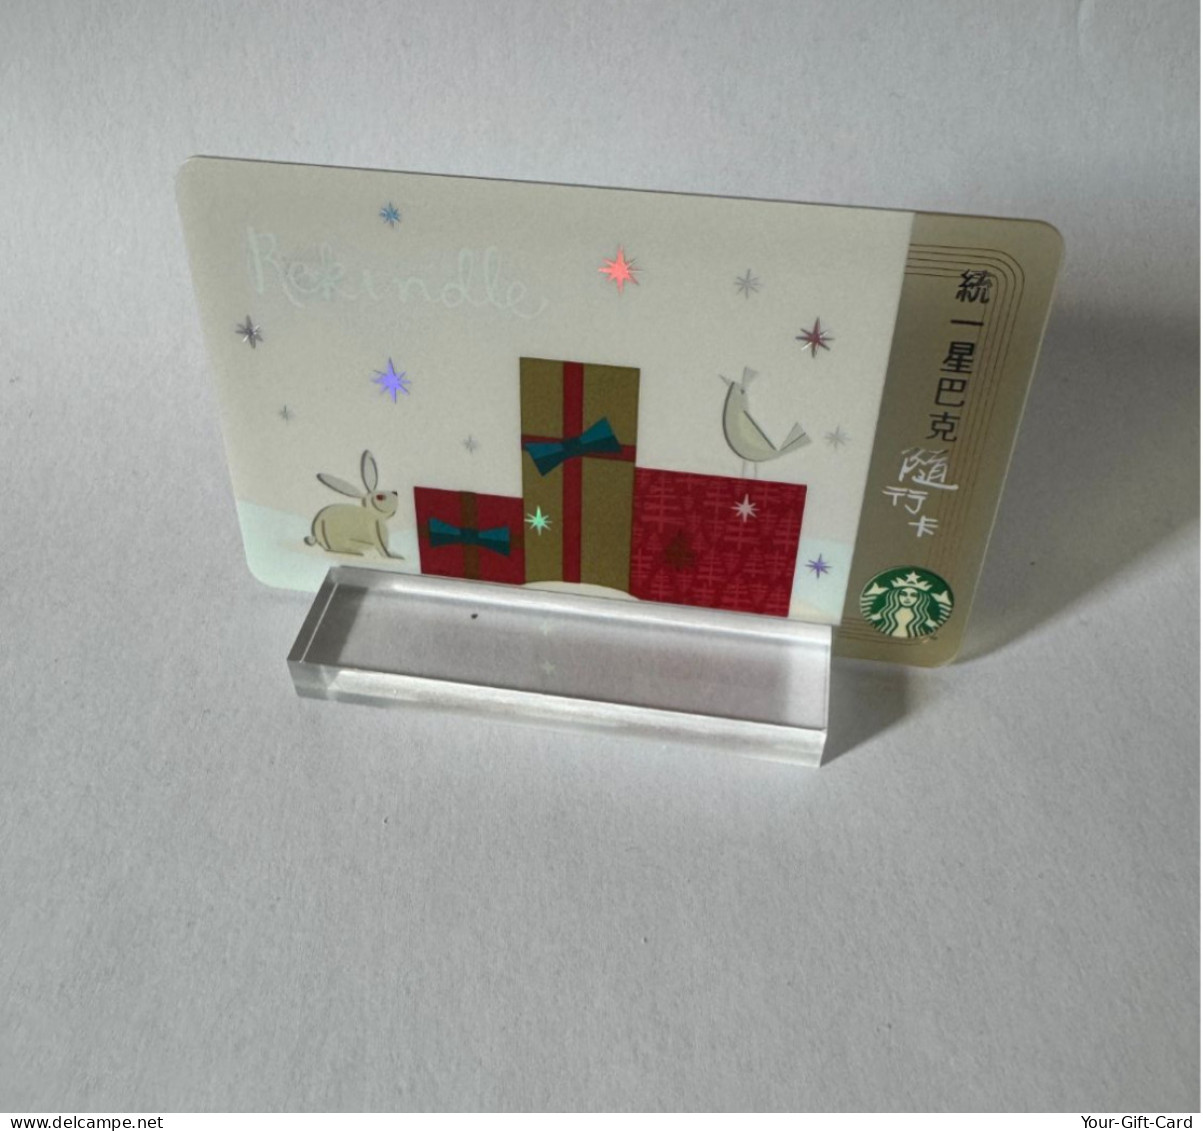 Starbucks Card Taiwan Christmas 2012 - Gift Cards